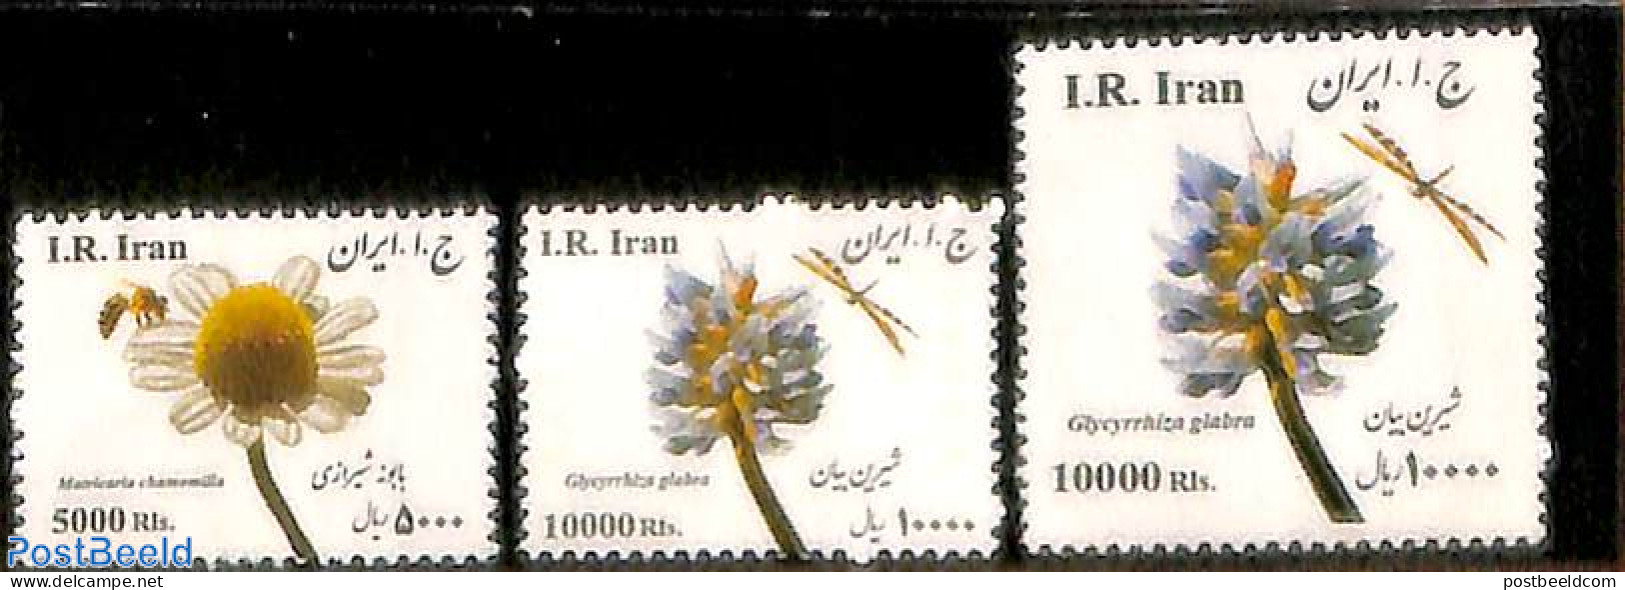 Iran/Persia 2017 Medical Flowers 3v, Mint NH, Nature - Flowers & Plants - Irán